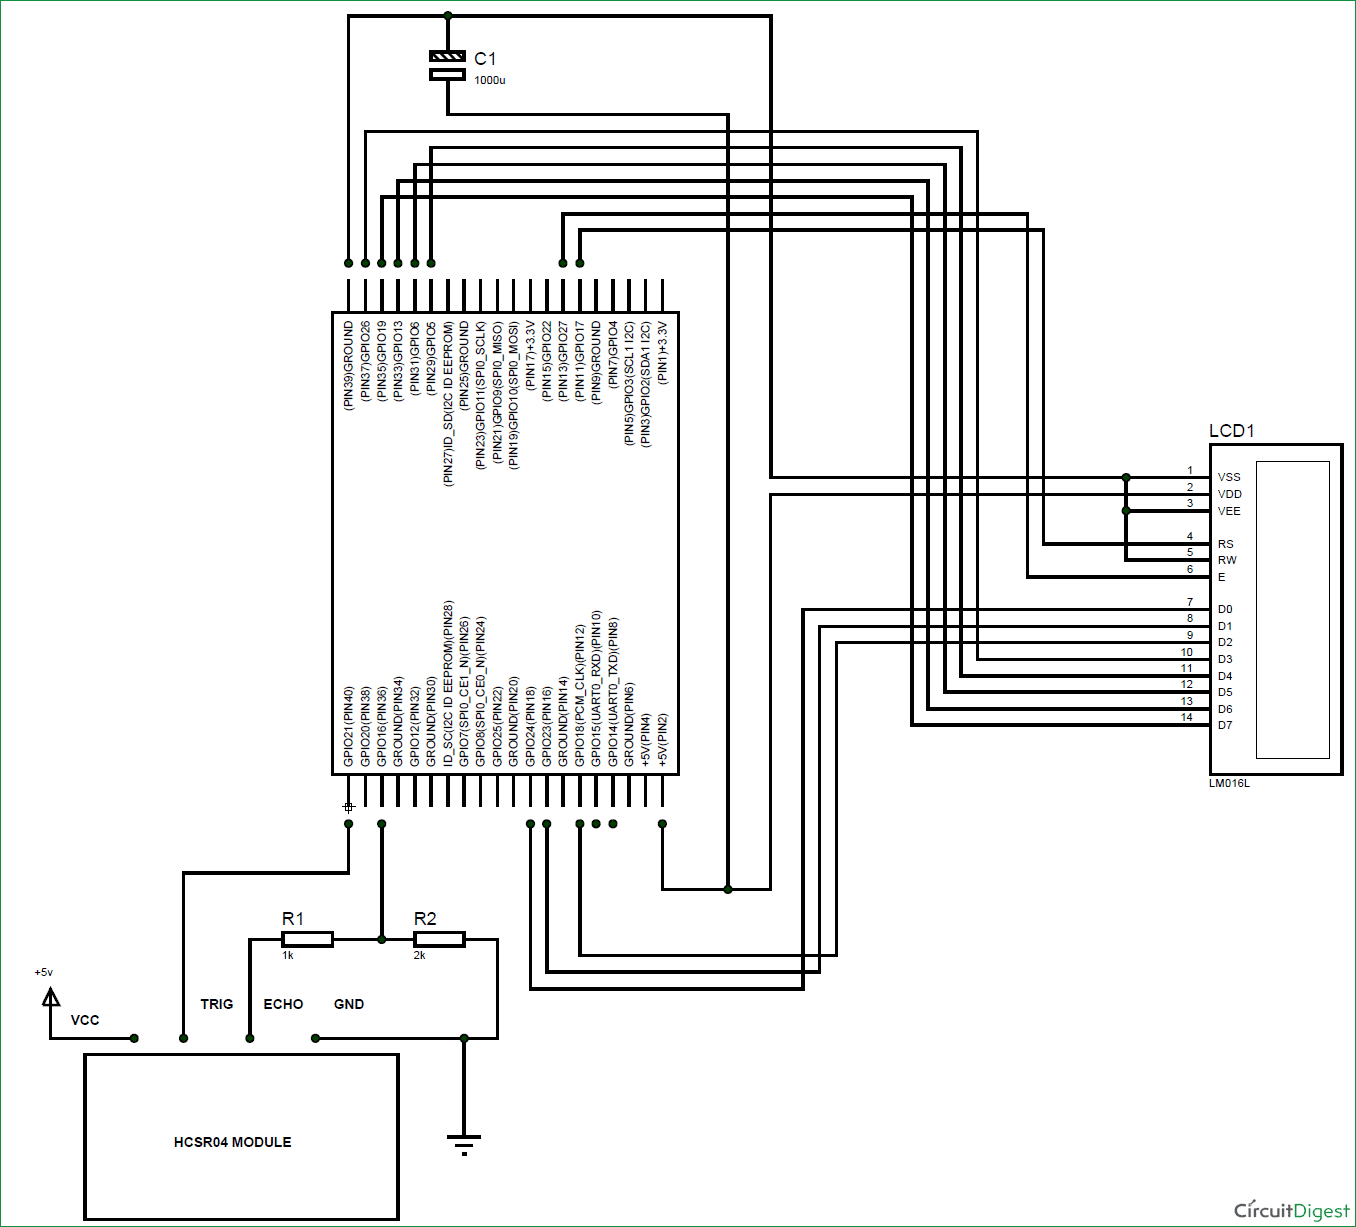 interfacing-ultrasonic-sensor-HCSR04-and-Raspberry-Pi-circuit